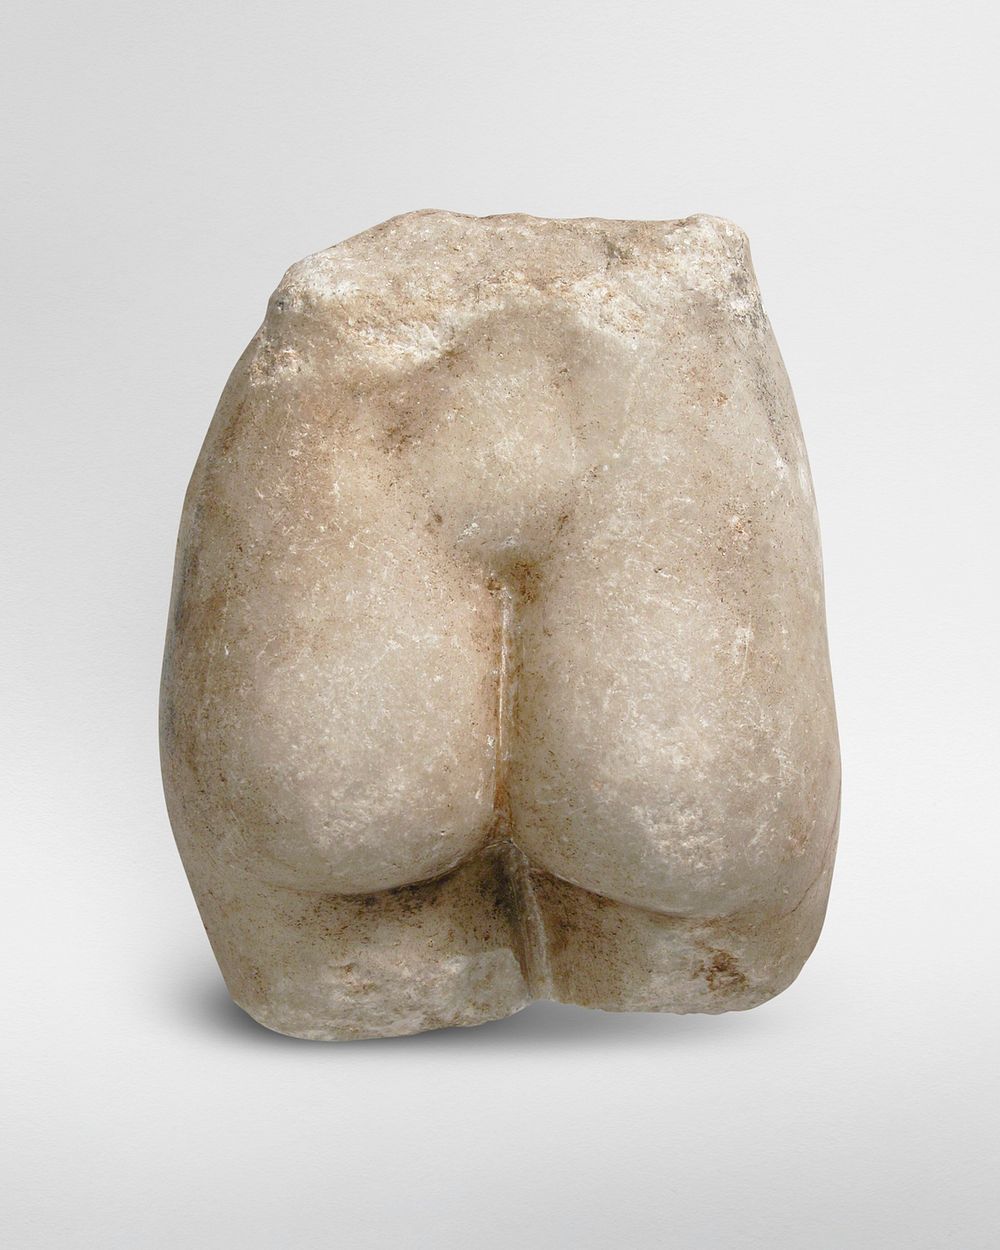 Young woman nude torso fragment back view mockup